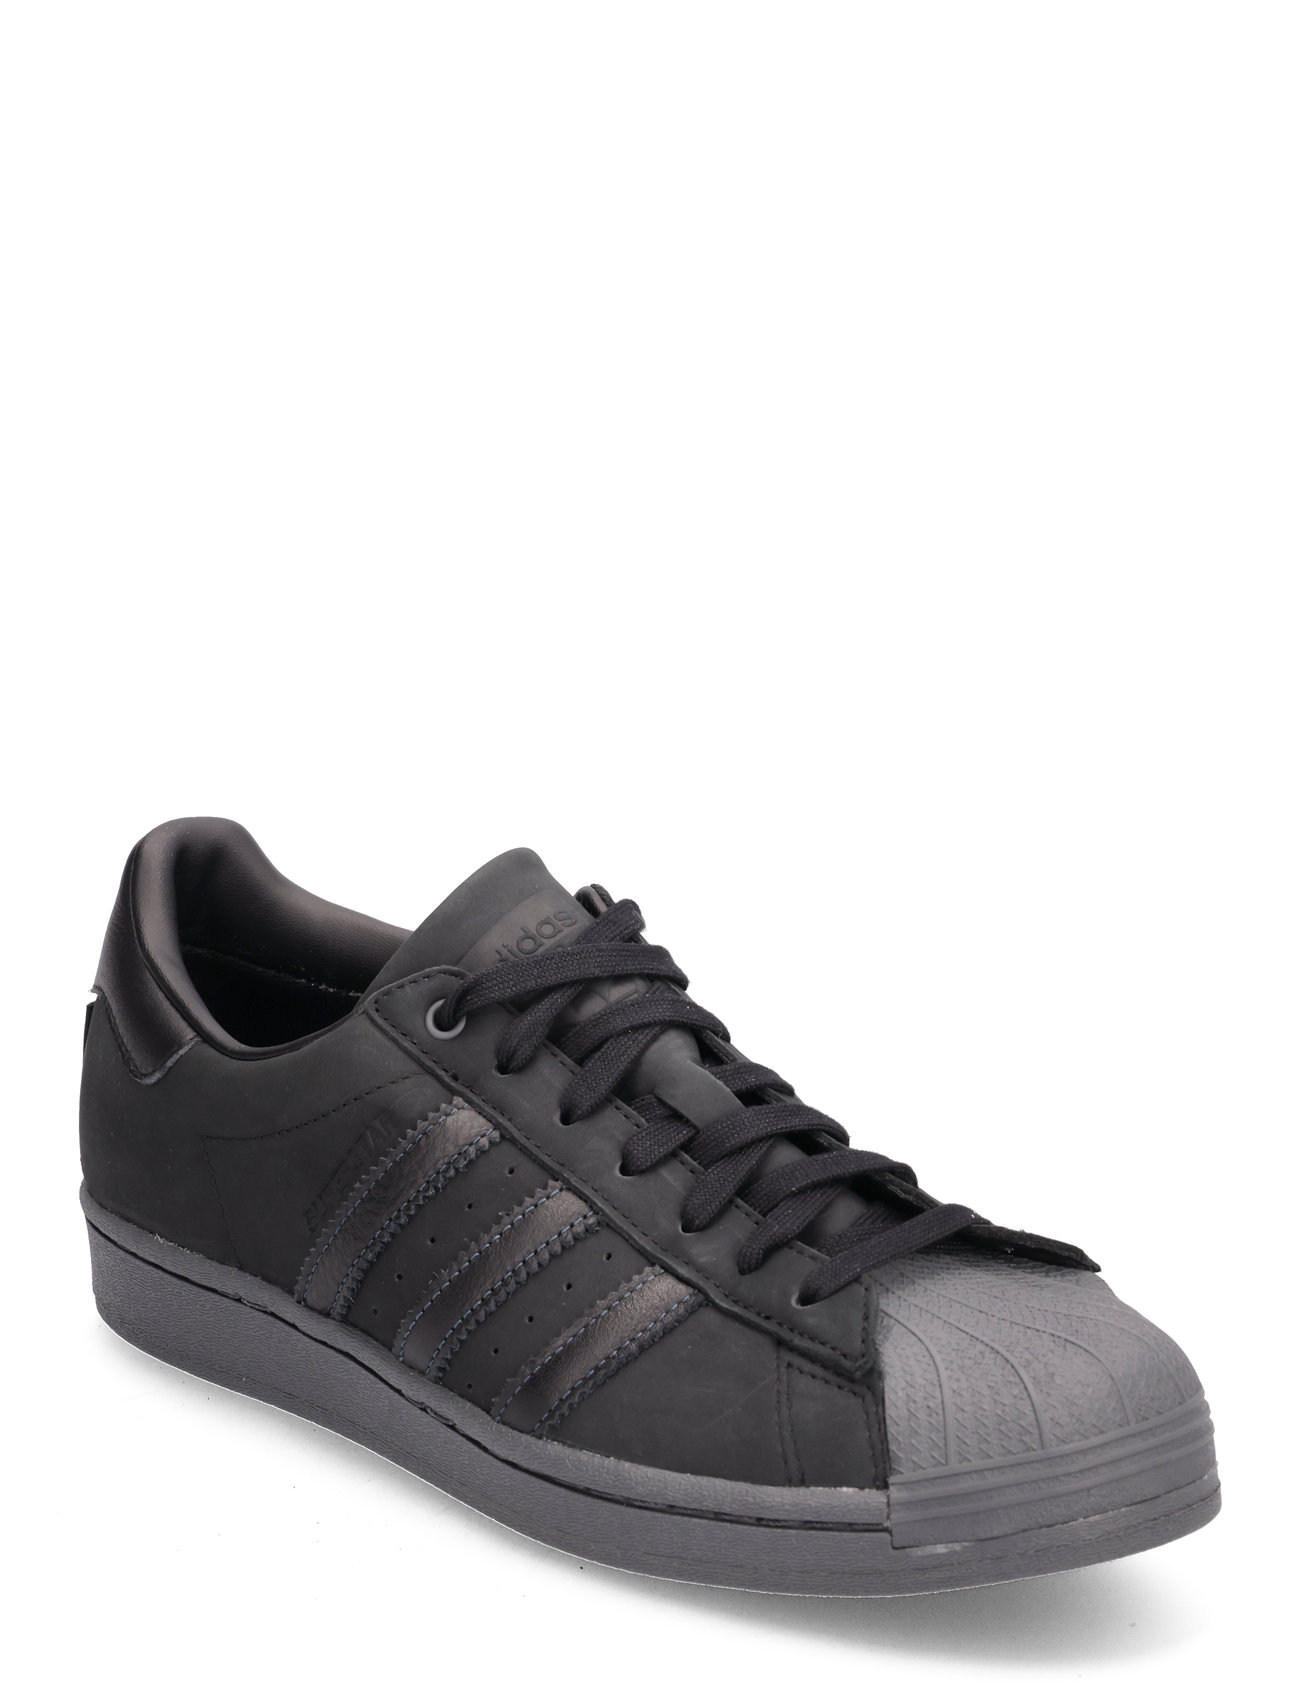 adidas Originals Superstar Gtx Shoes Low-top Sneakers Sort Adidas Originals*Betinget Tilbud